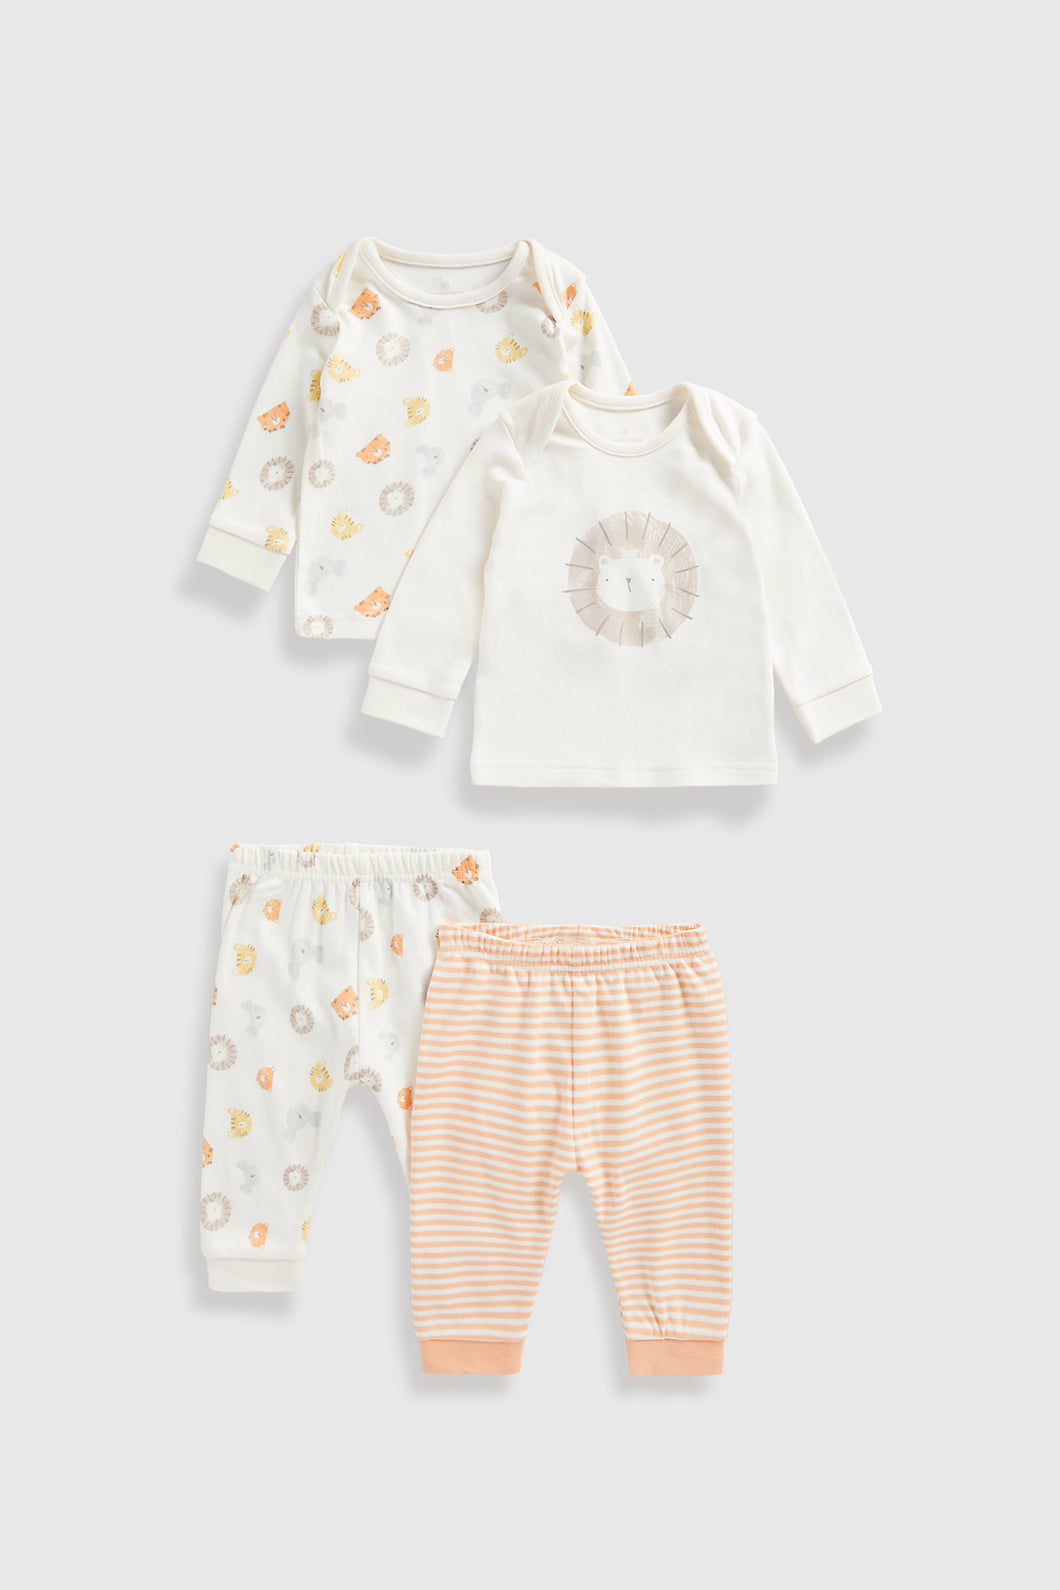 Mothercare Safari Faces Baby Pyjamas - 2 Pack